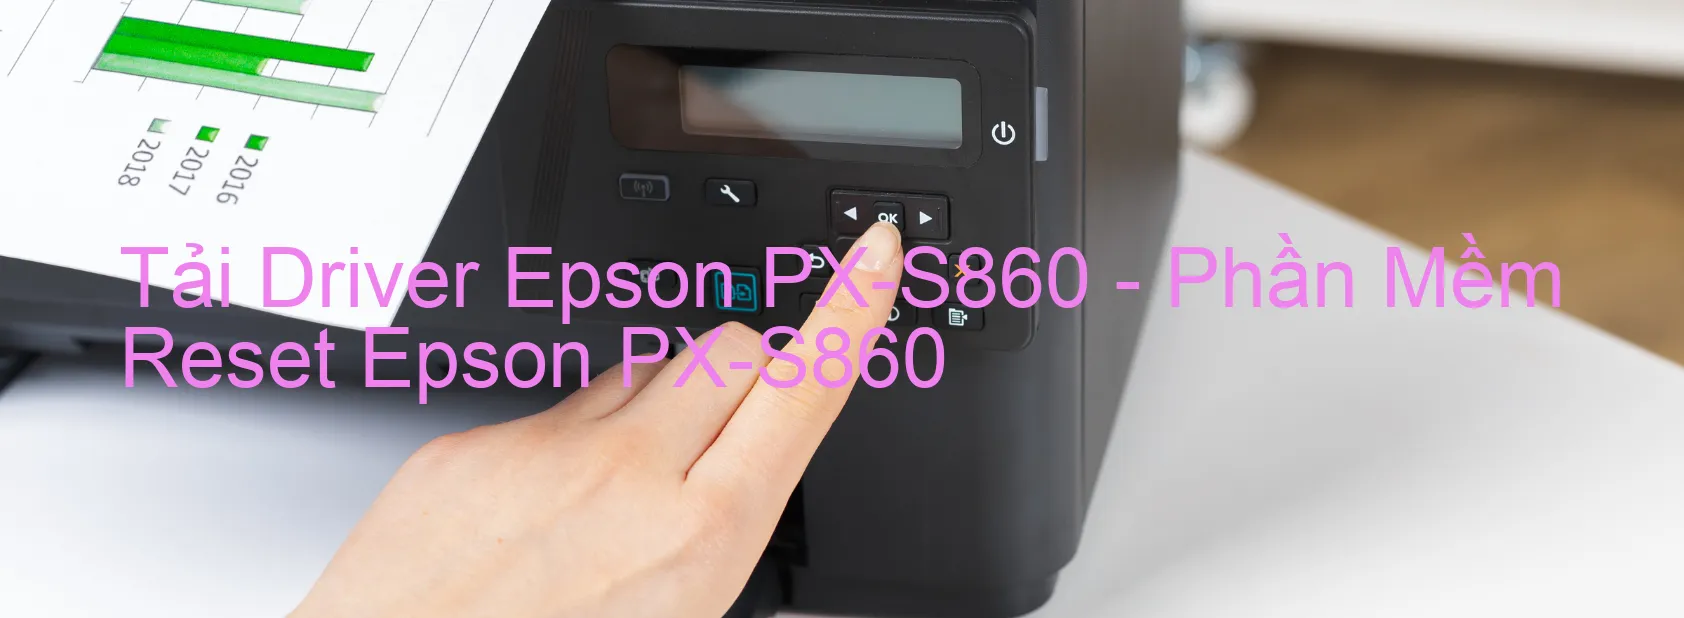 Driver Epson PX-S860, Phần Mềm Reset Epson PX-S860